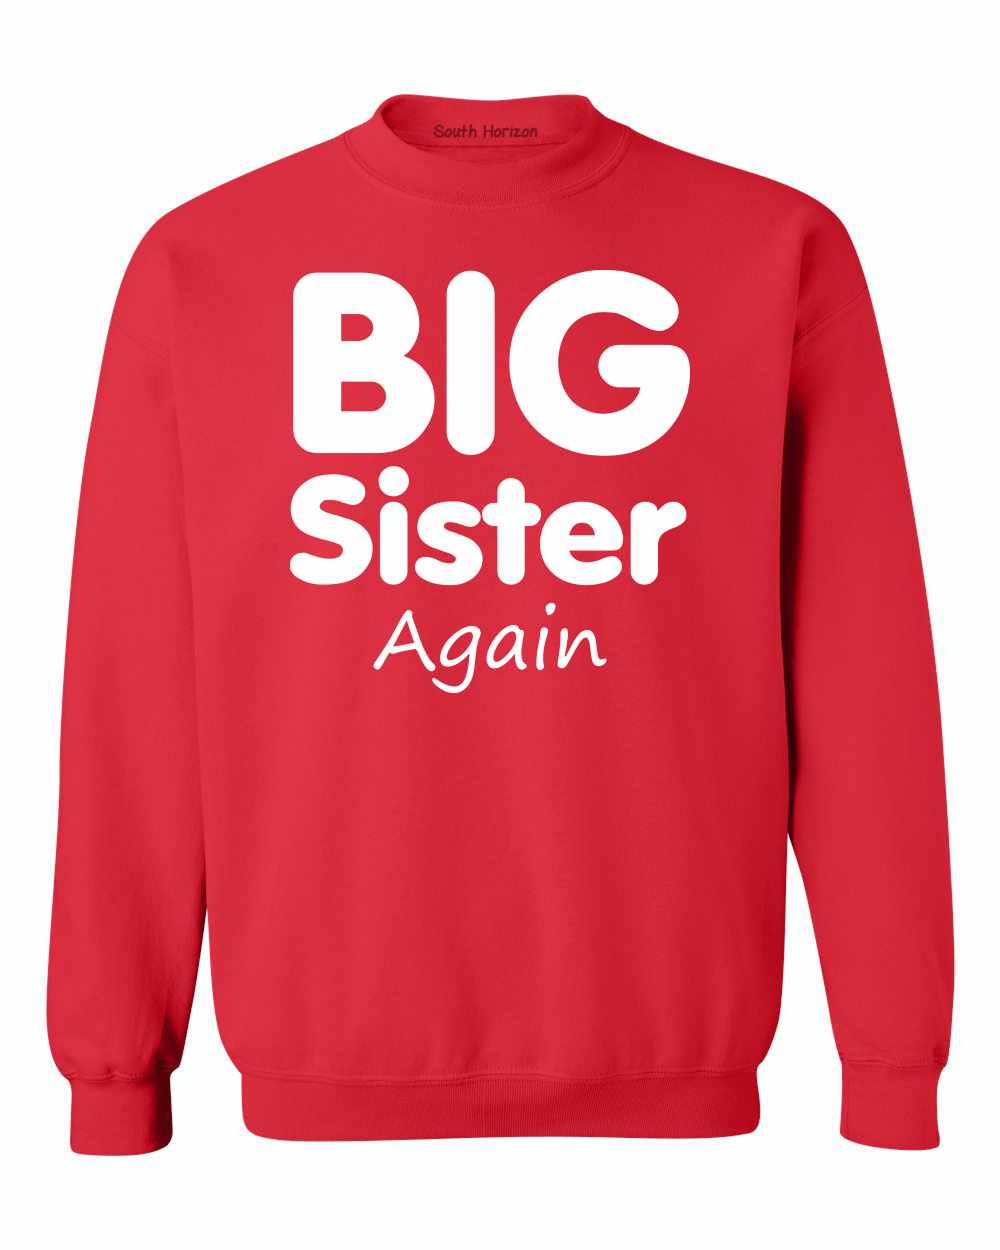 Big Sister Again on SweatShirt (#859-11)